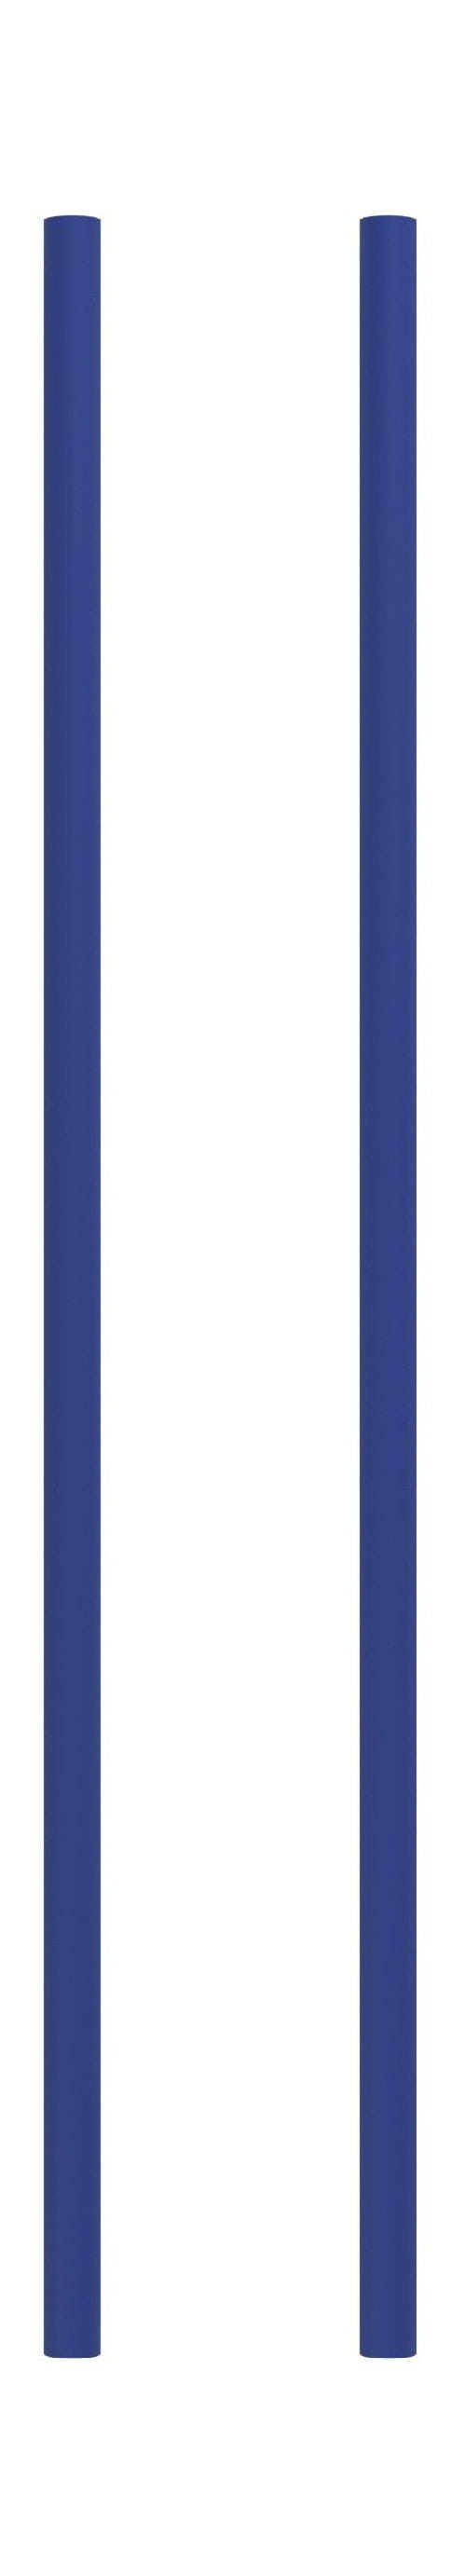 Moebe -Regalsystem/Wandregalbein 65 cm, tiefblau